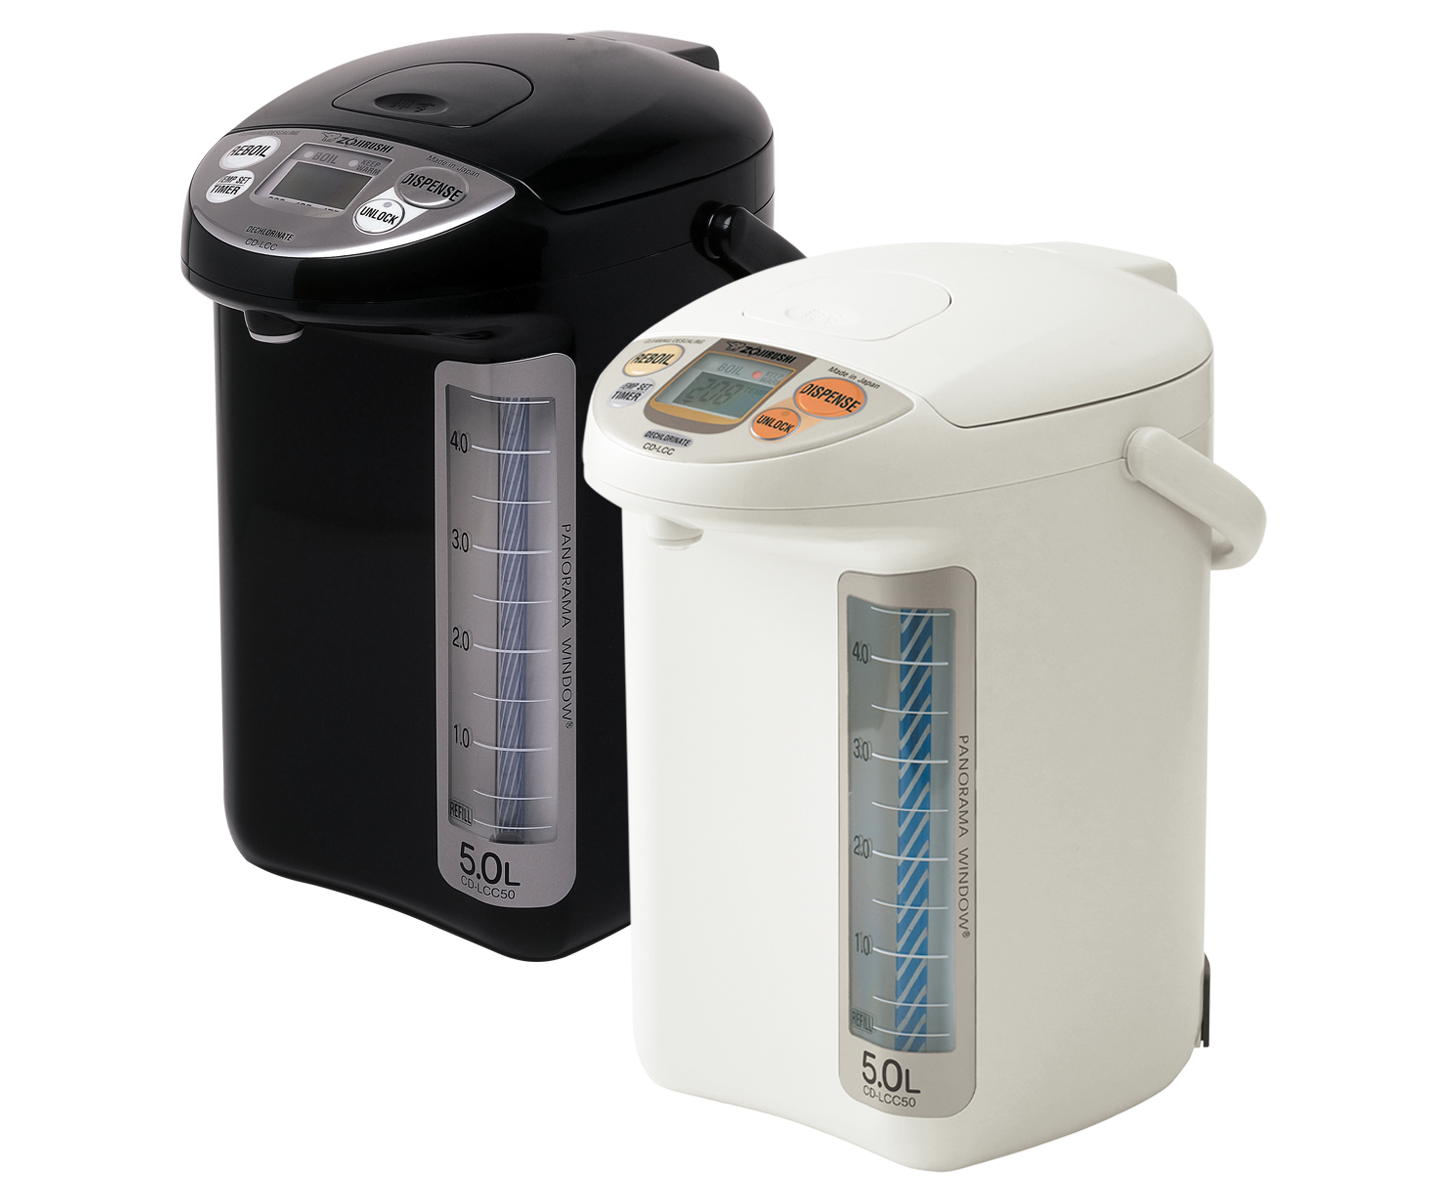 Micom Water Boiler & Warmer (CD-WHC40)